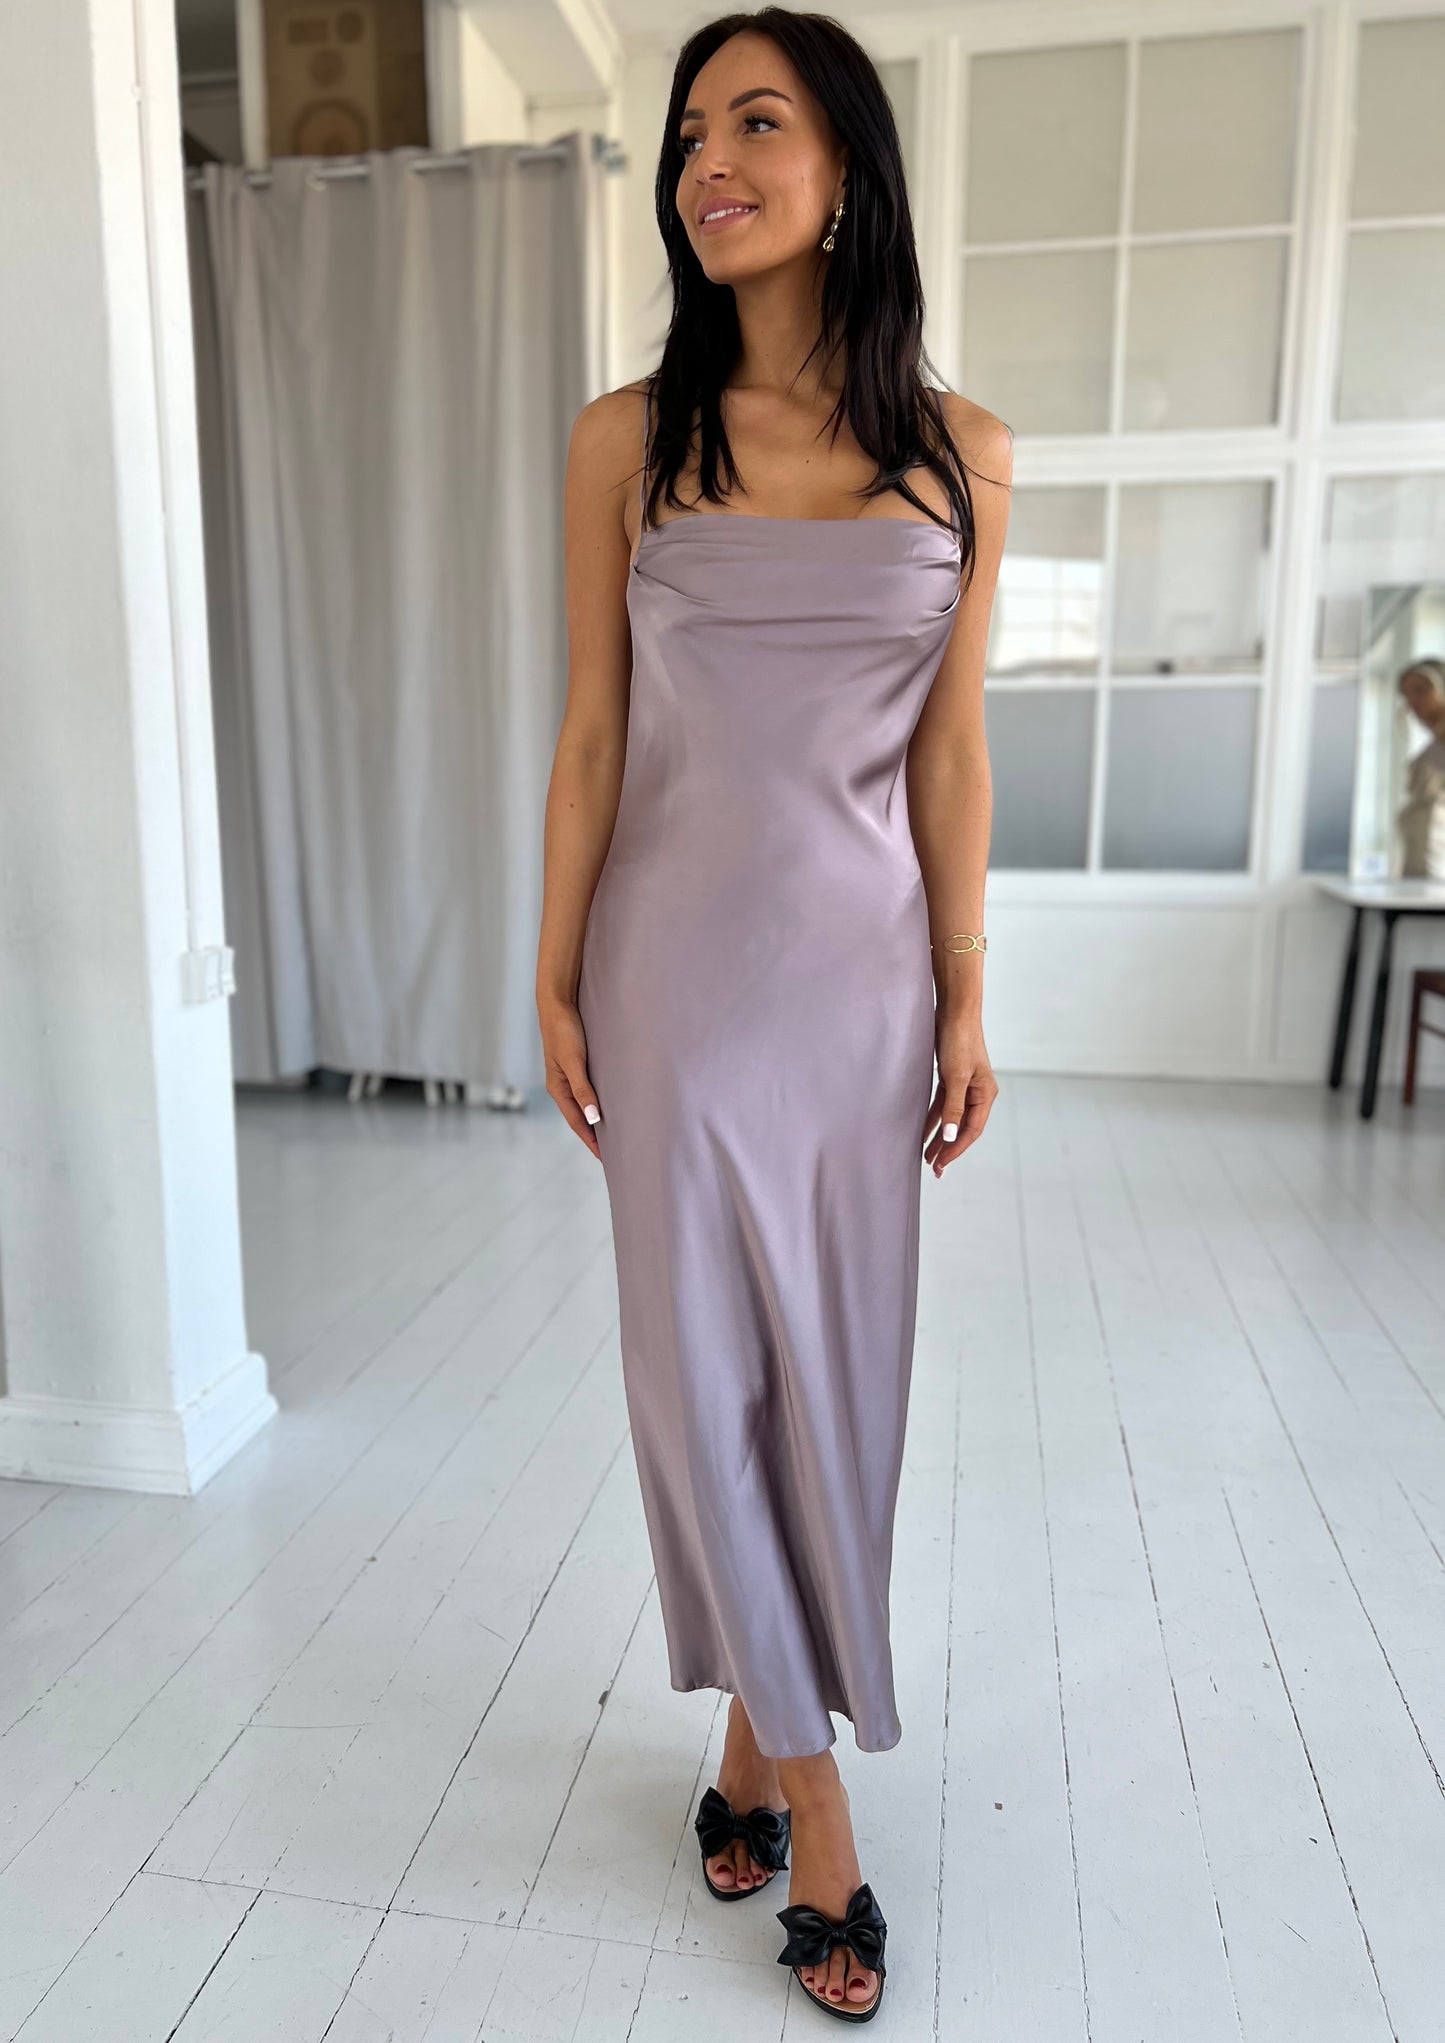 Lily satin lavender dress (685)